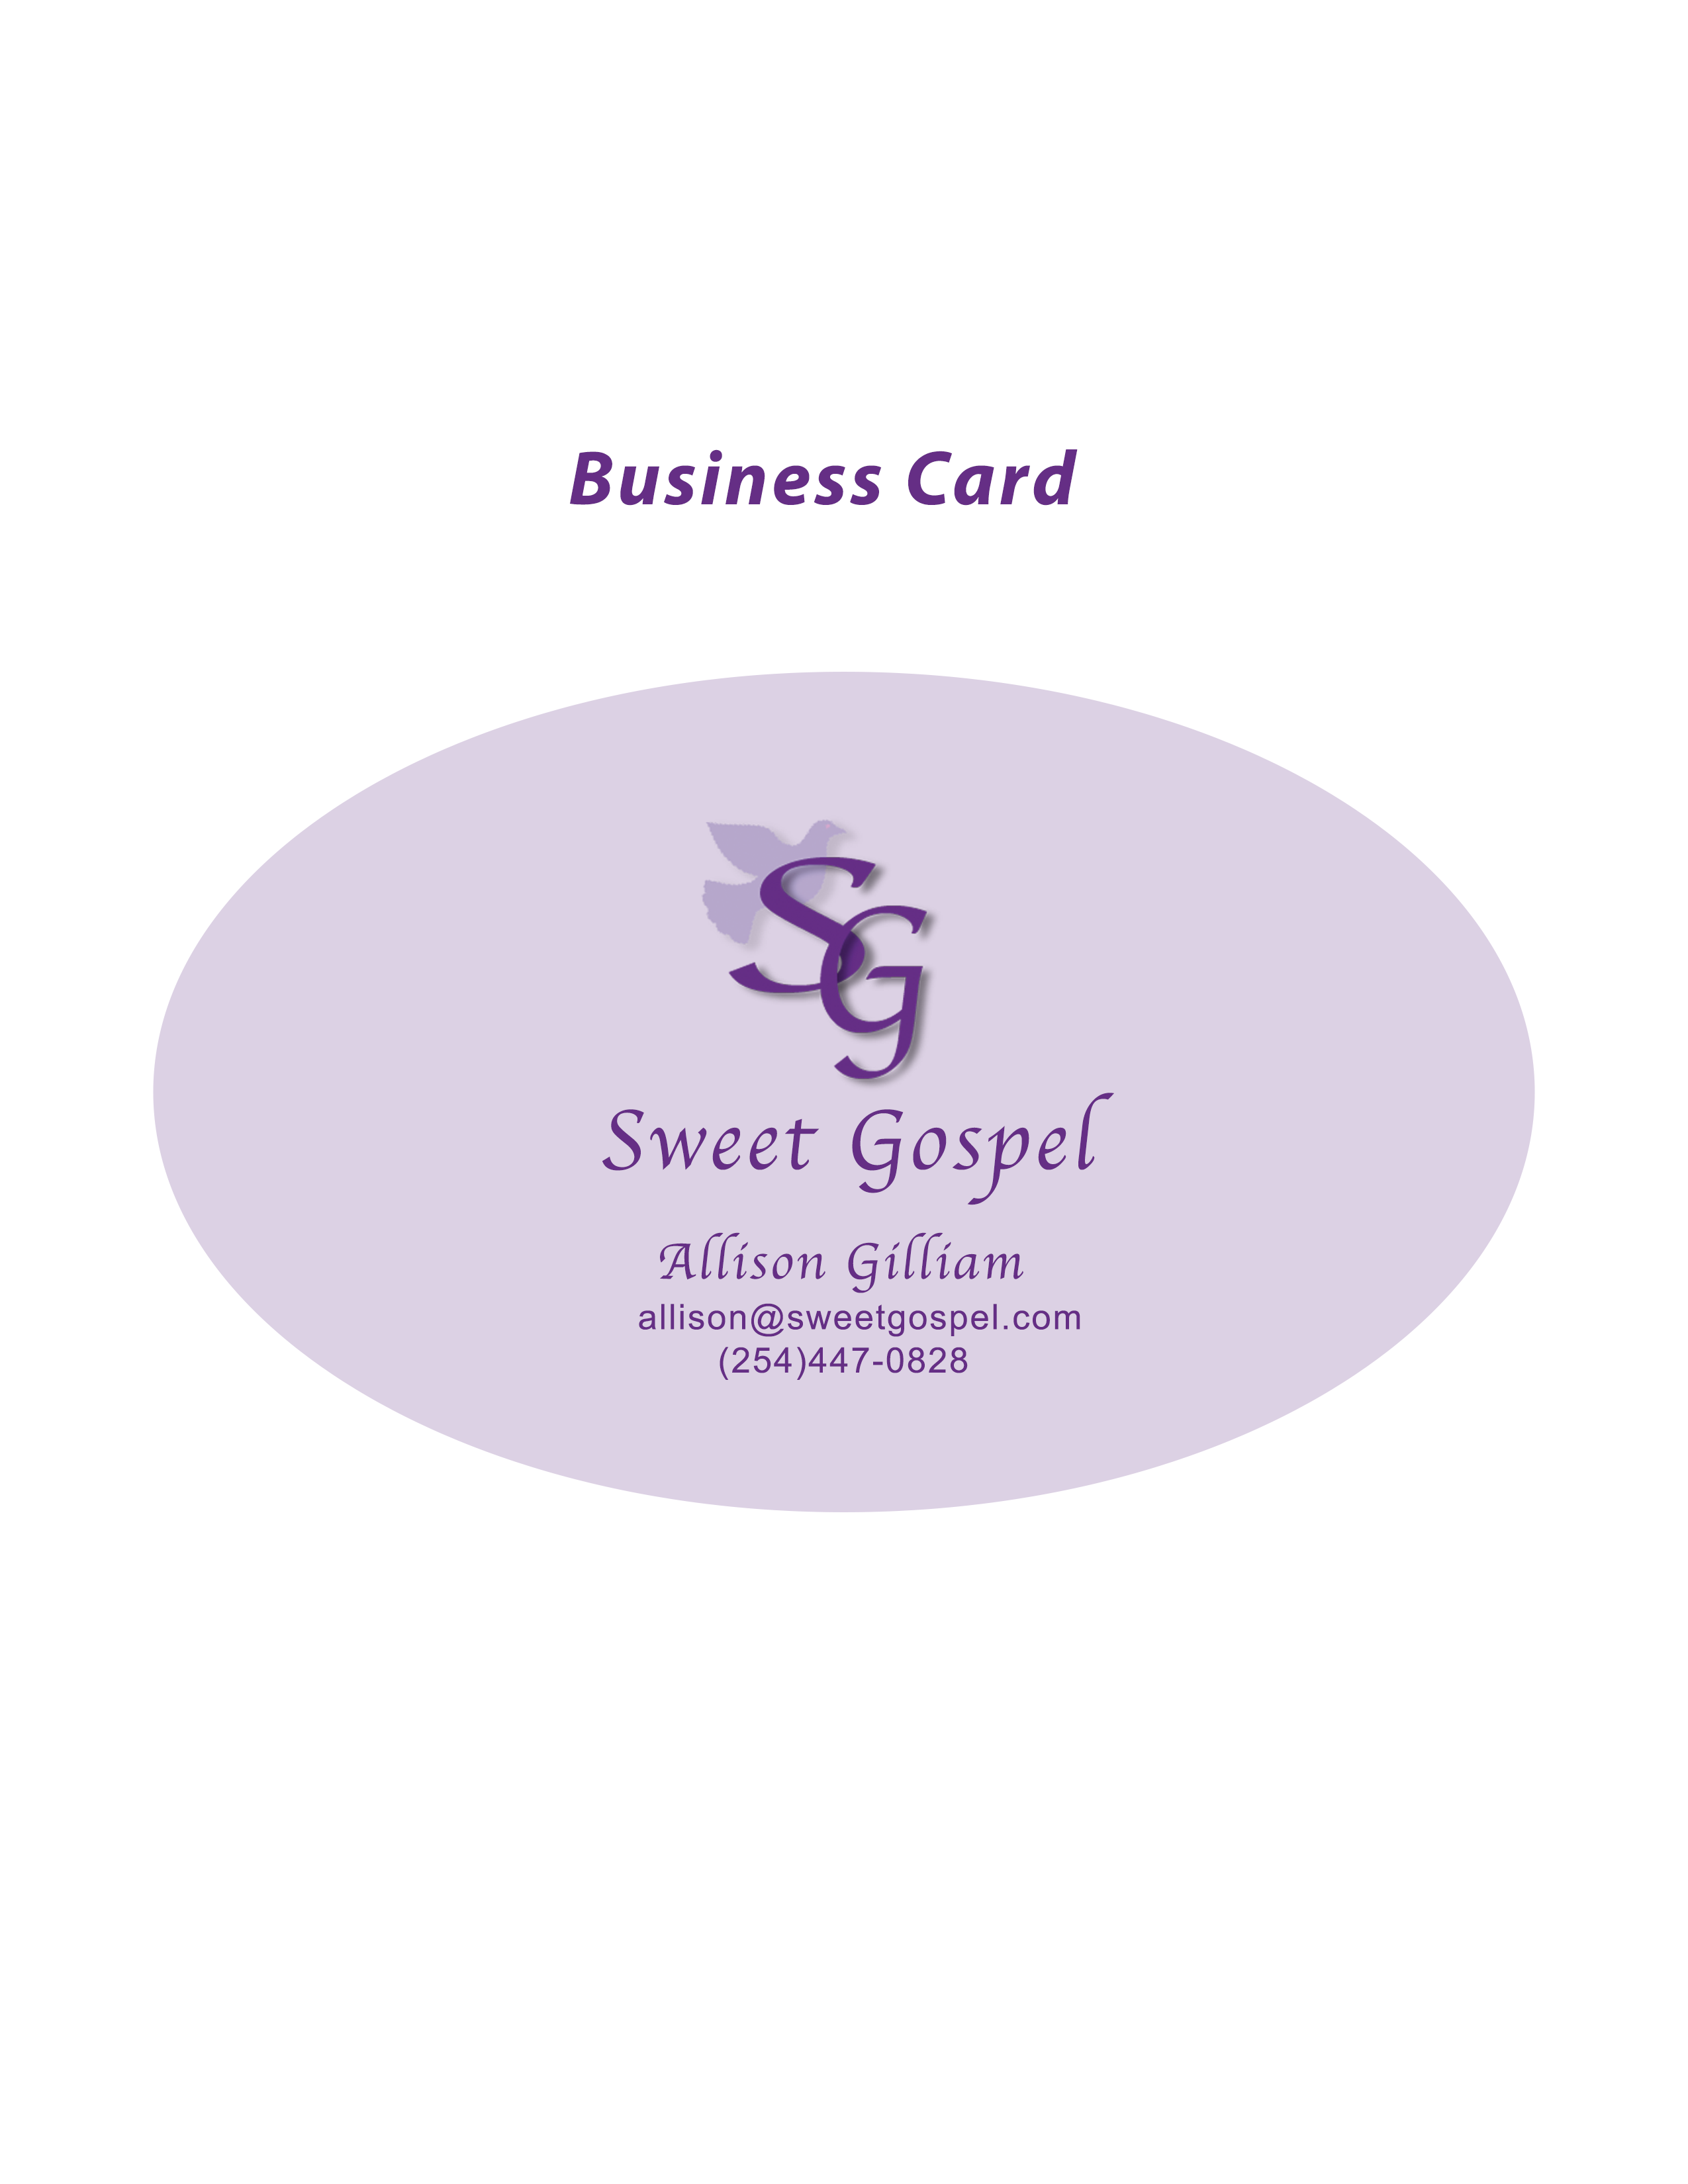 Photo of Sweet Gospel Biz Card